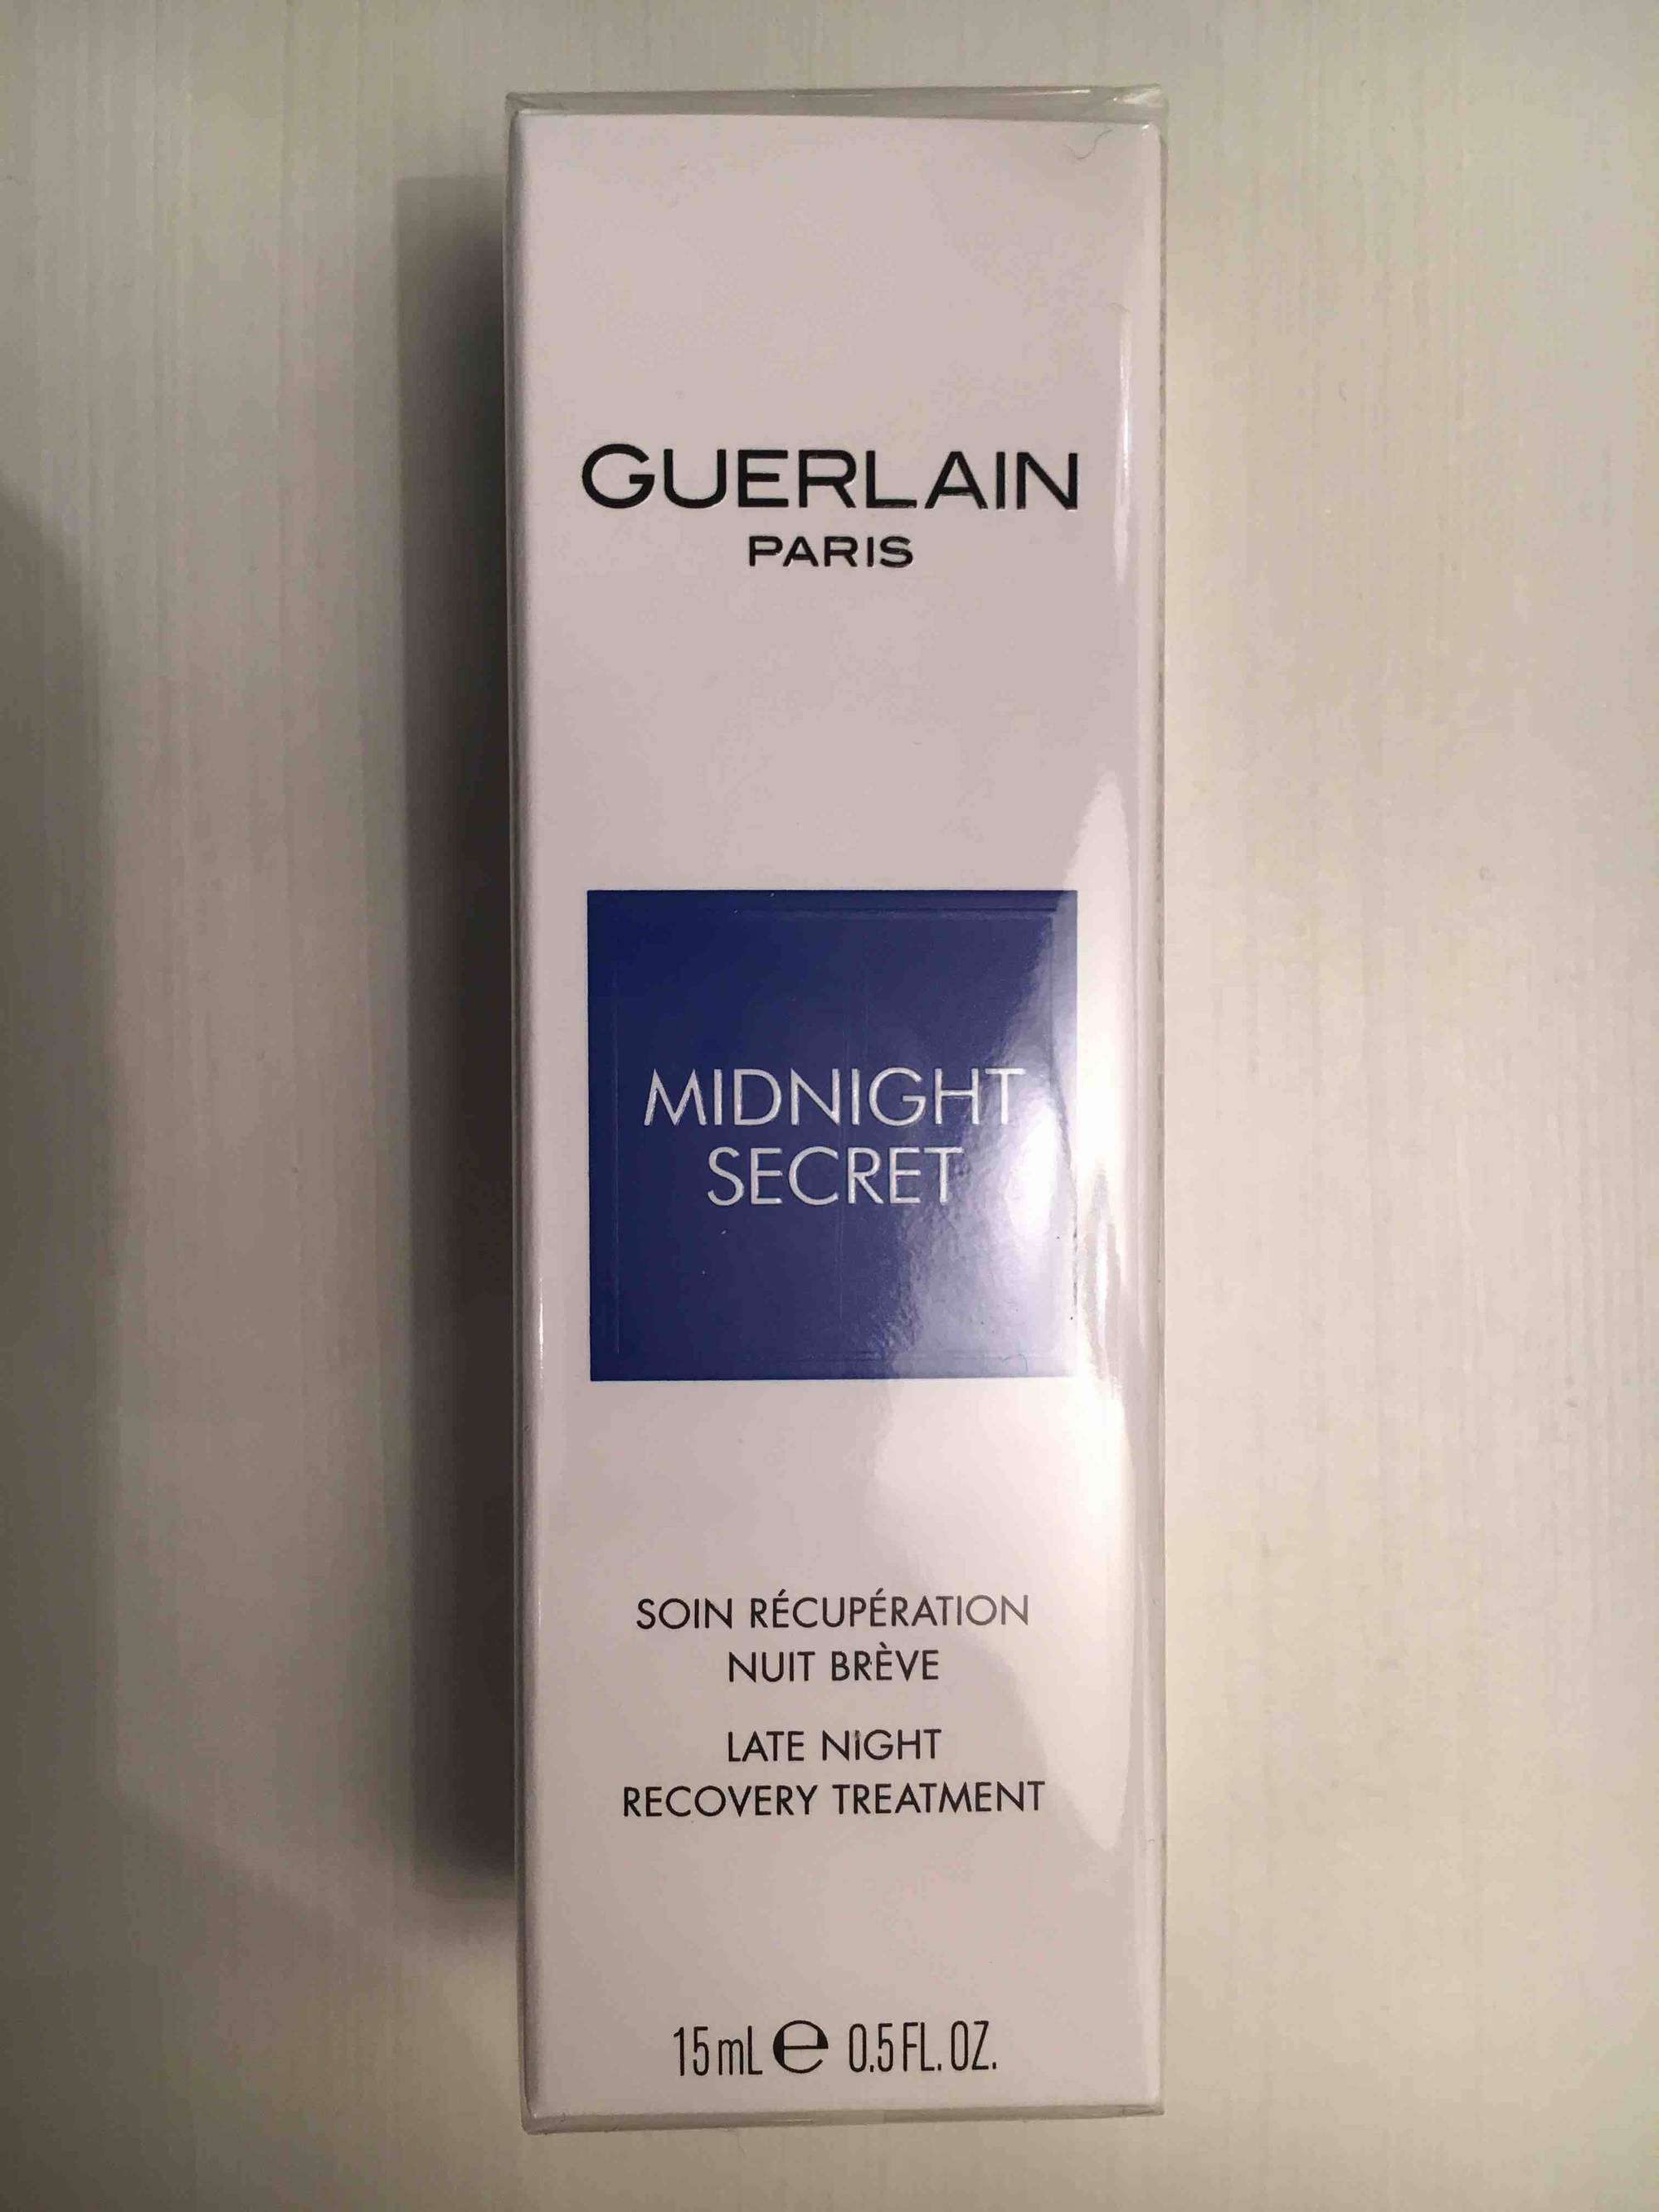 GUERLAIN - Midnight secret - Soin récupération nuit brève